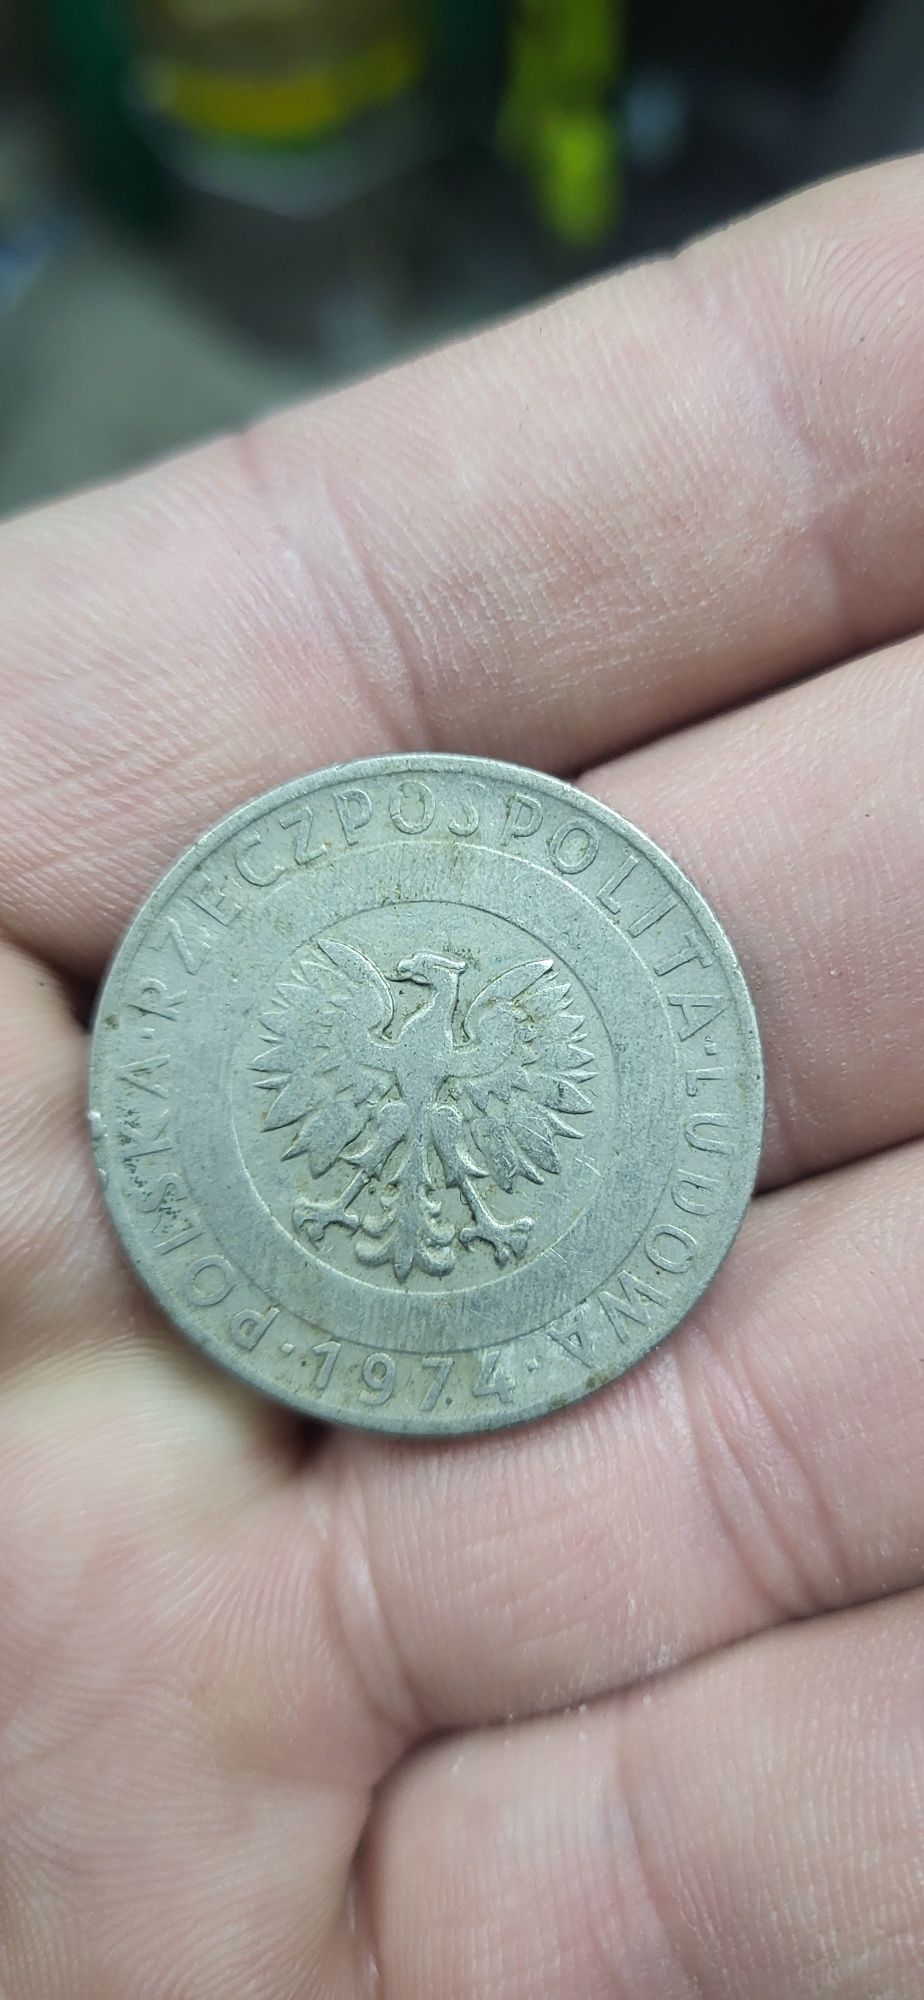 Moneta 20 zł 1974r.